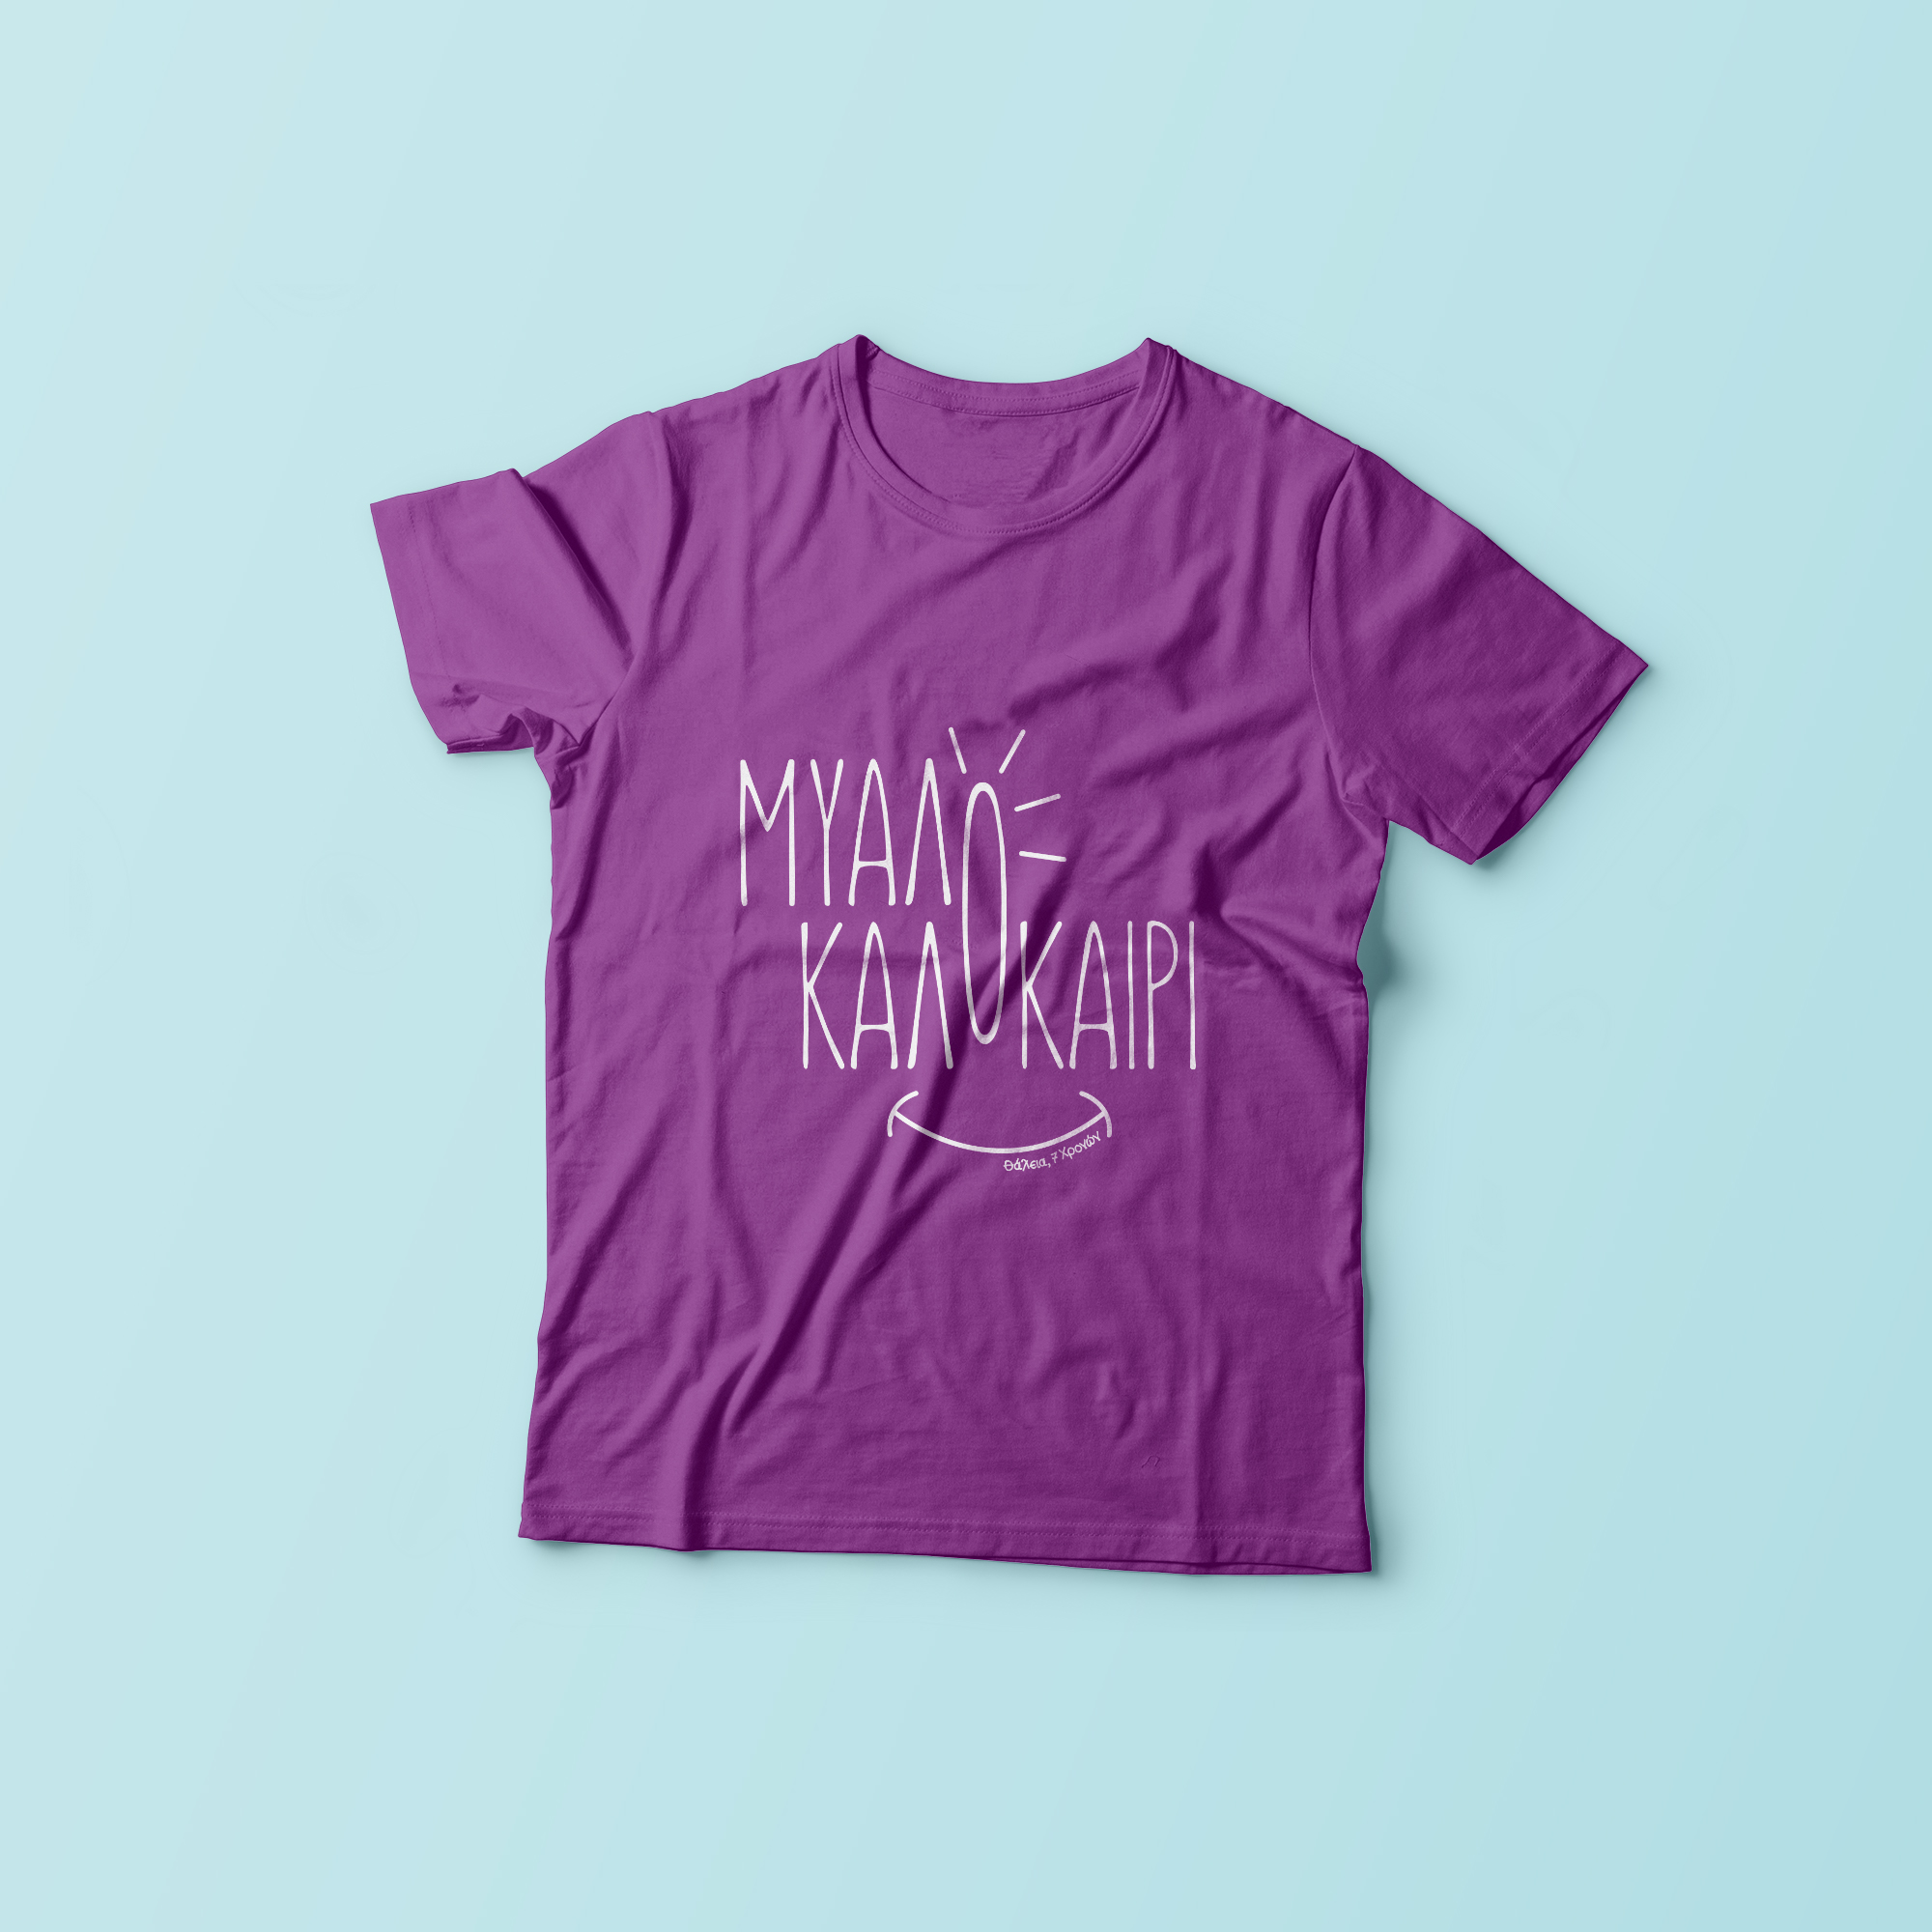 A purple t-shirt with Myalo Kalokairi design on it